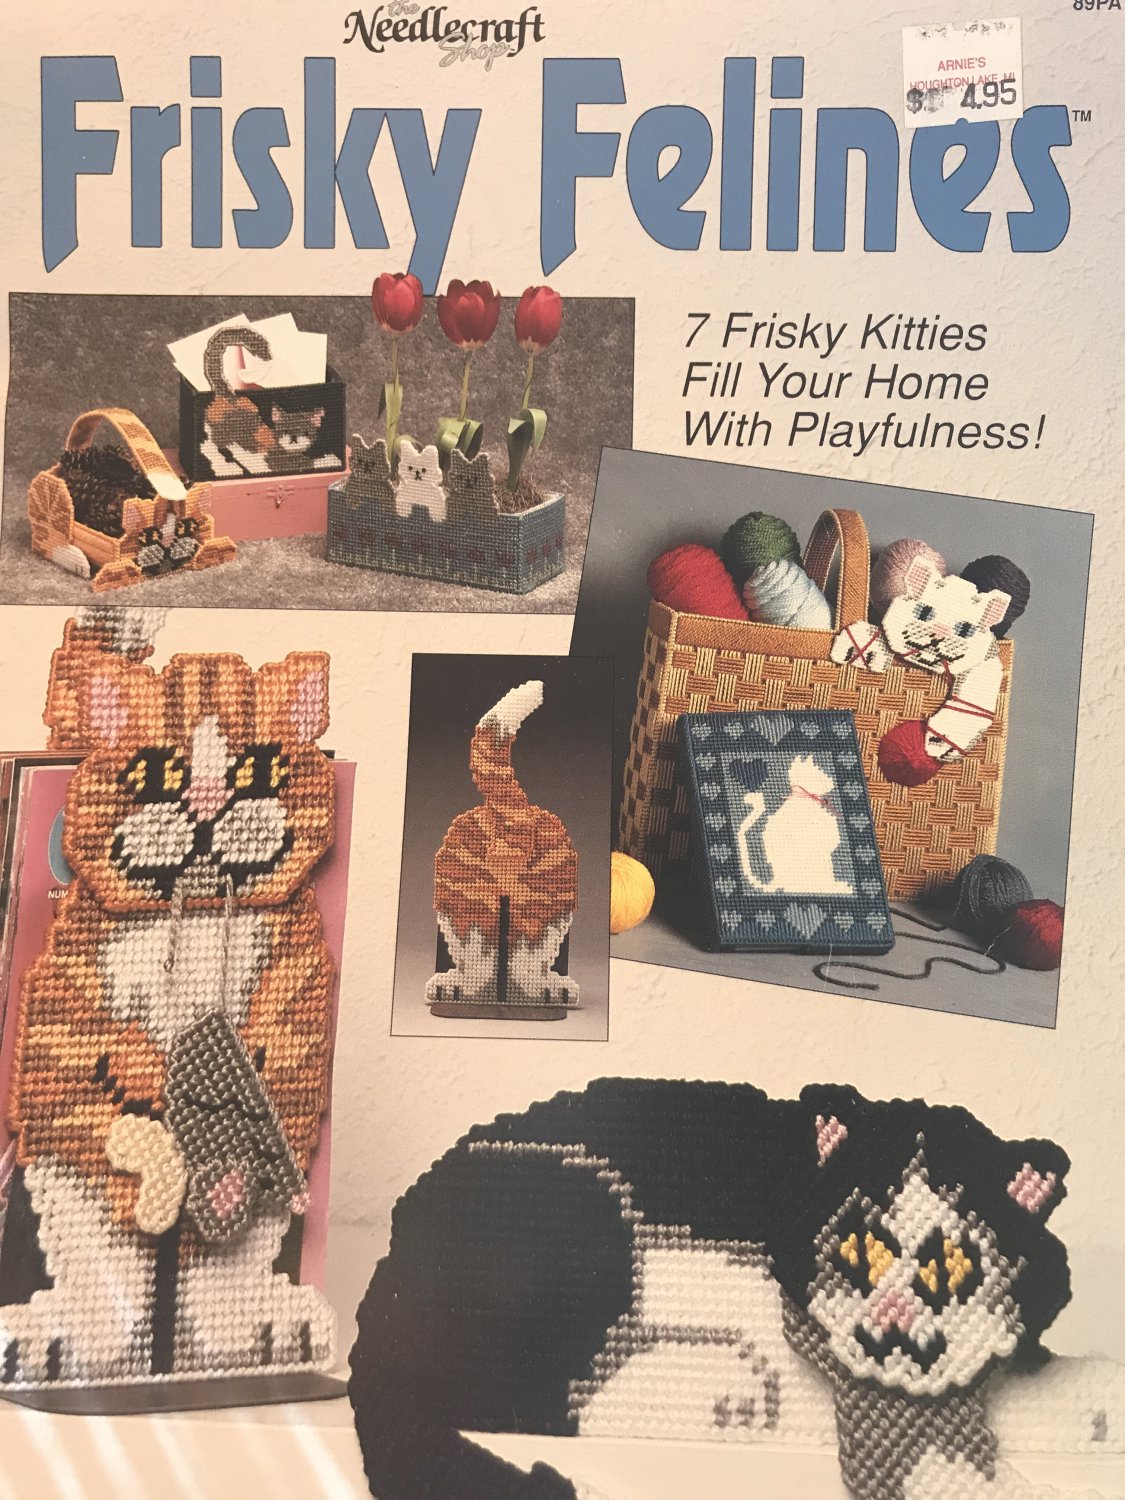 Frisky Felines Plastic Canvas The Needlecraft Shop 89PA1